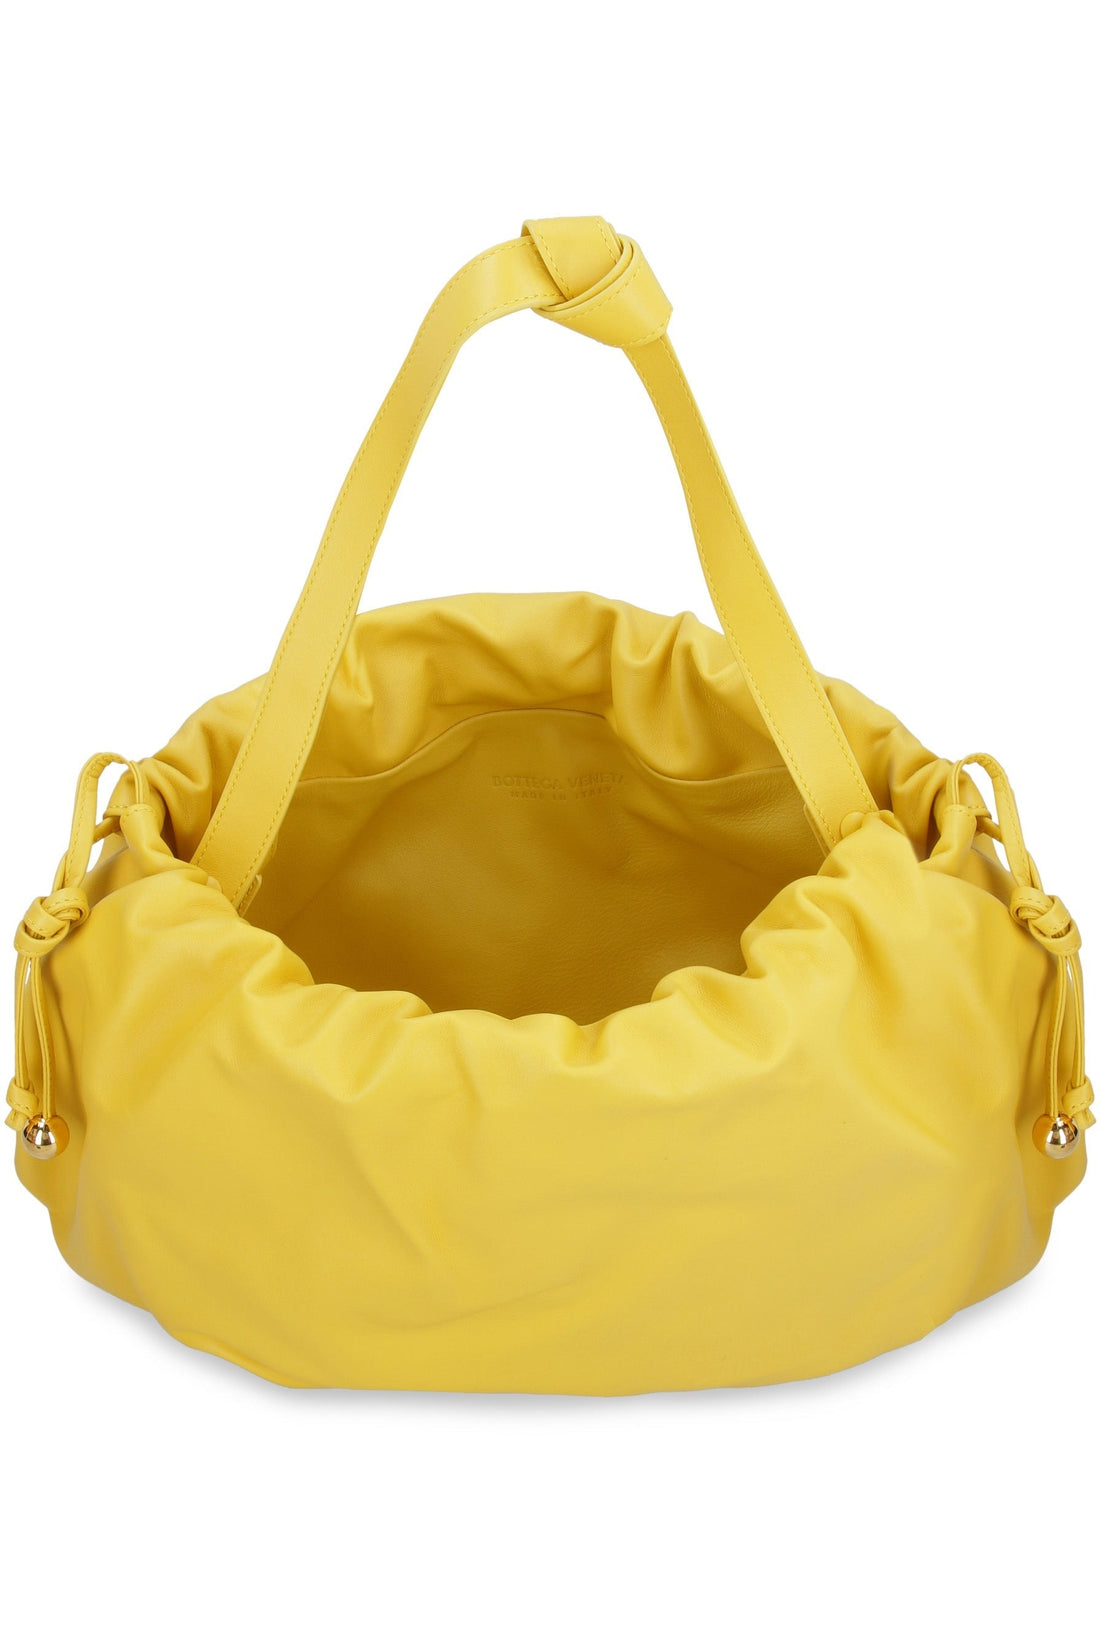 Bottega Veneta-OUTLET-SALE-The Bulb leather bag-ARCHIVIST